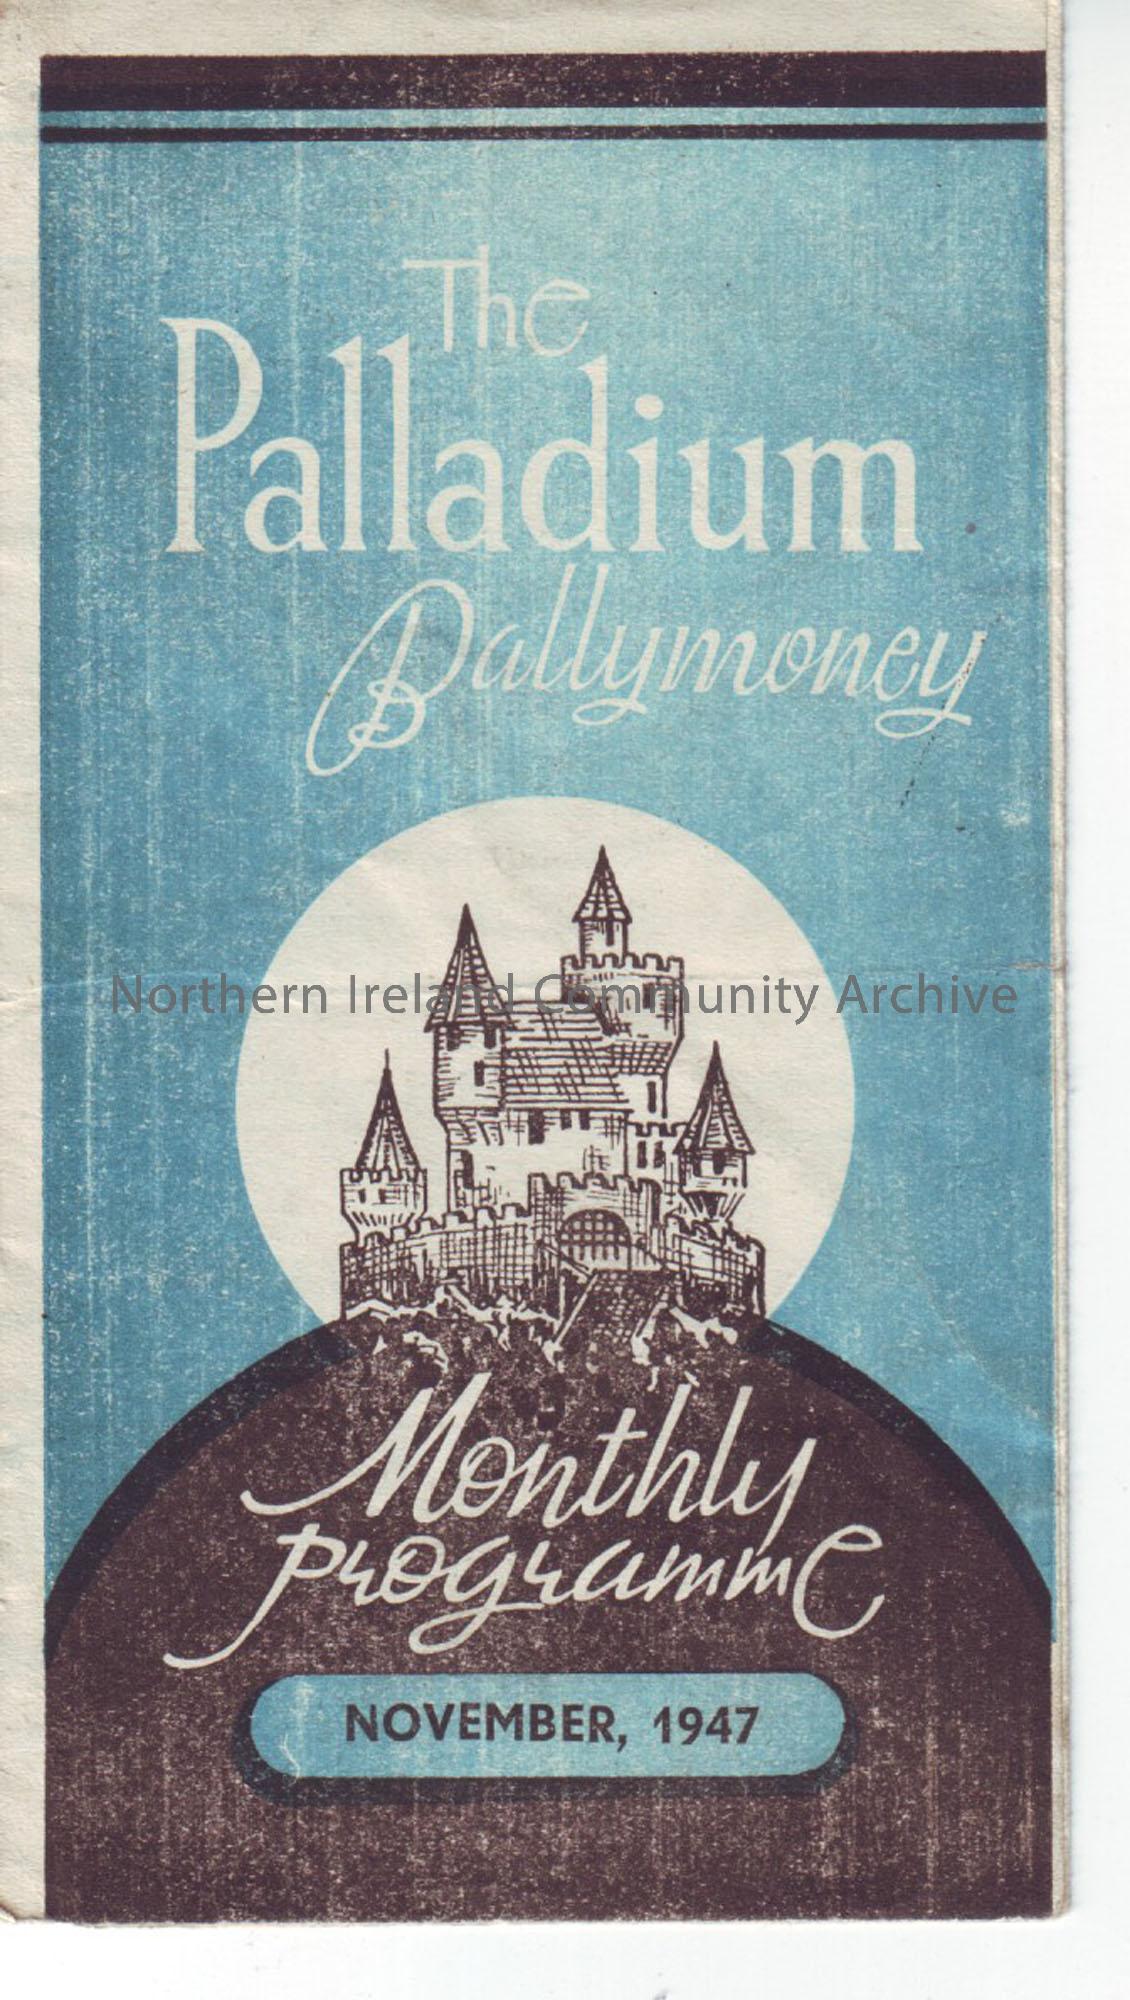 blue monthly programme for Ballymoney Palladium cinema- November 1947